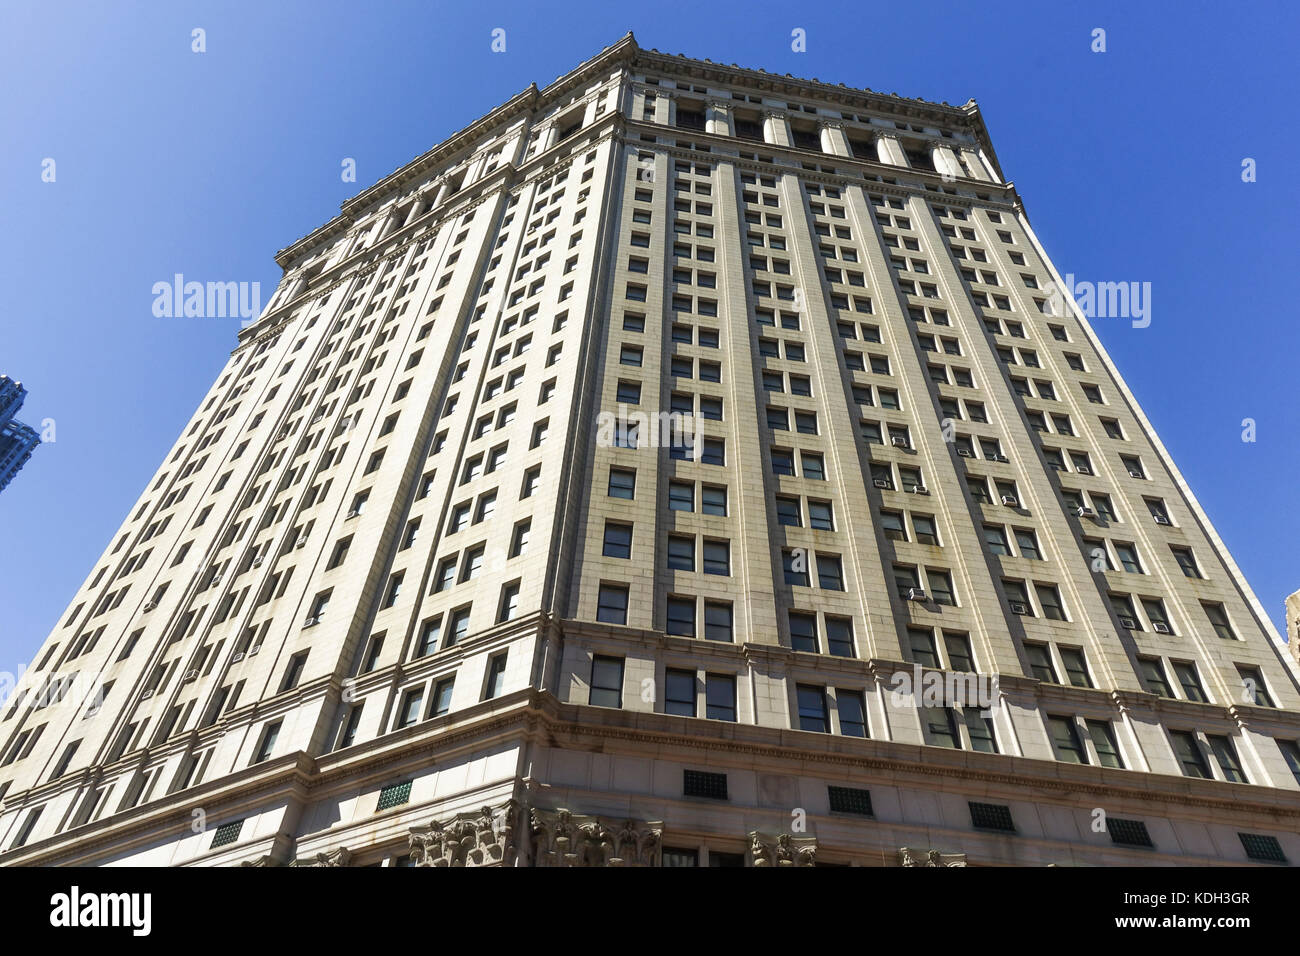 Manhattan Municipal Building, 40-stöckiges Gebäude an der Centre Street, New York City, USA, Nordamerika. Stockfoto